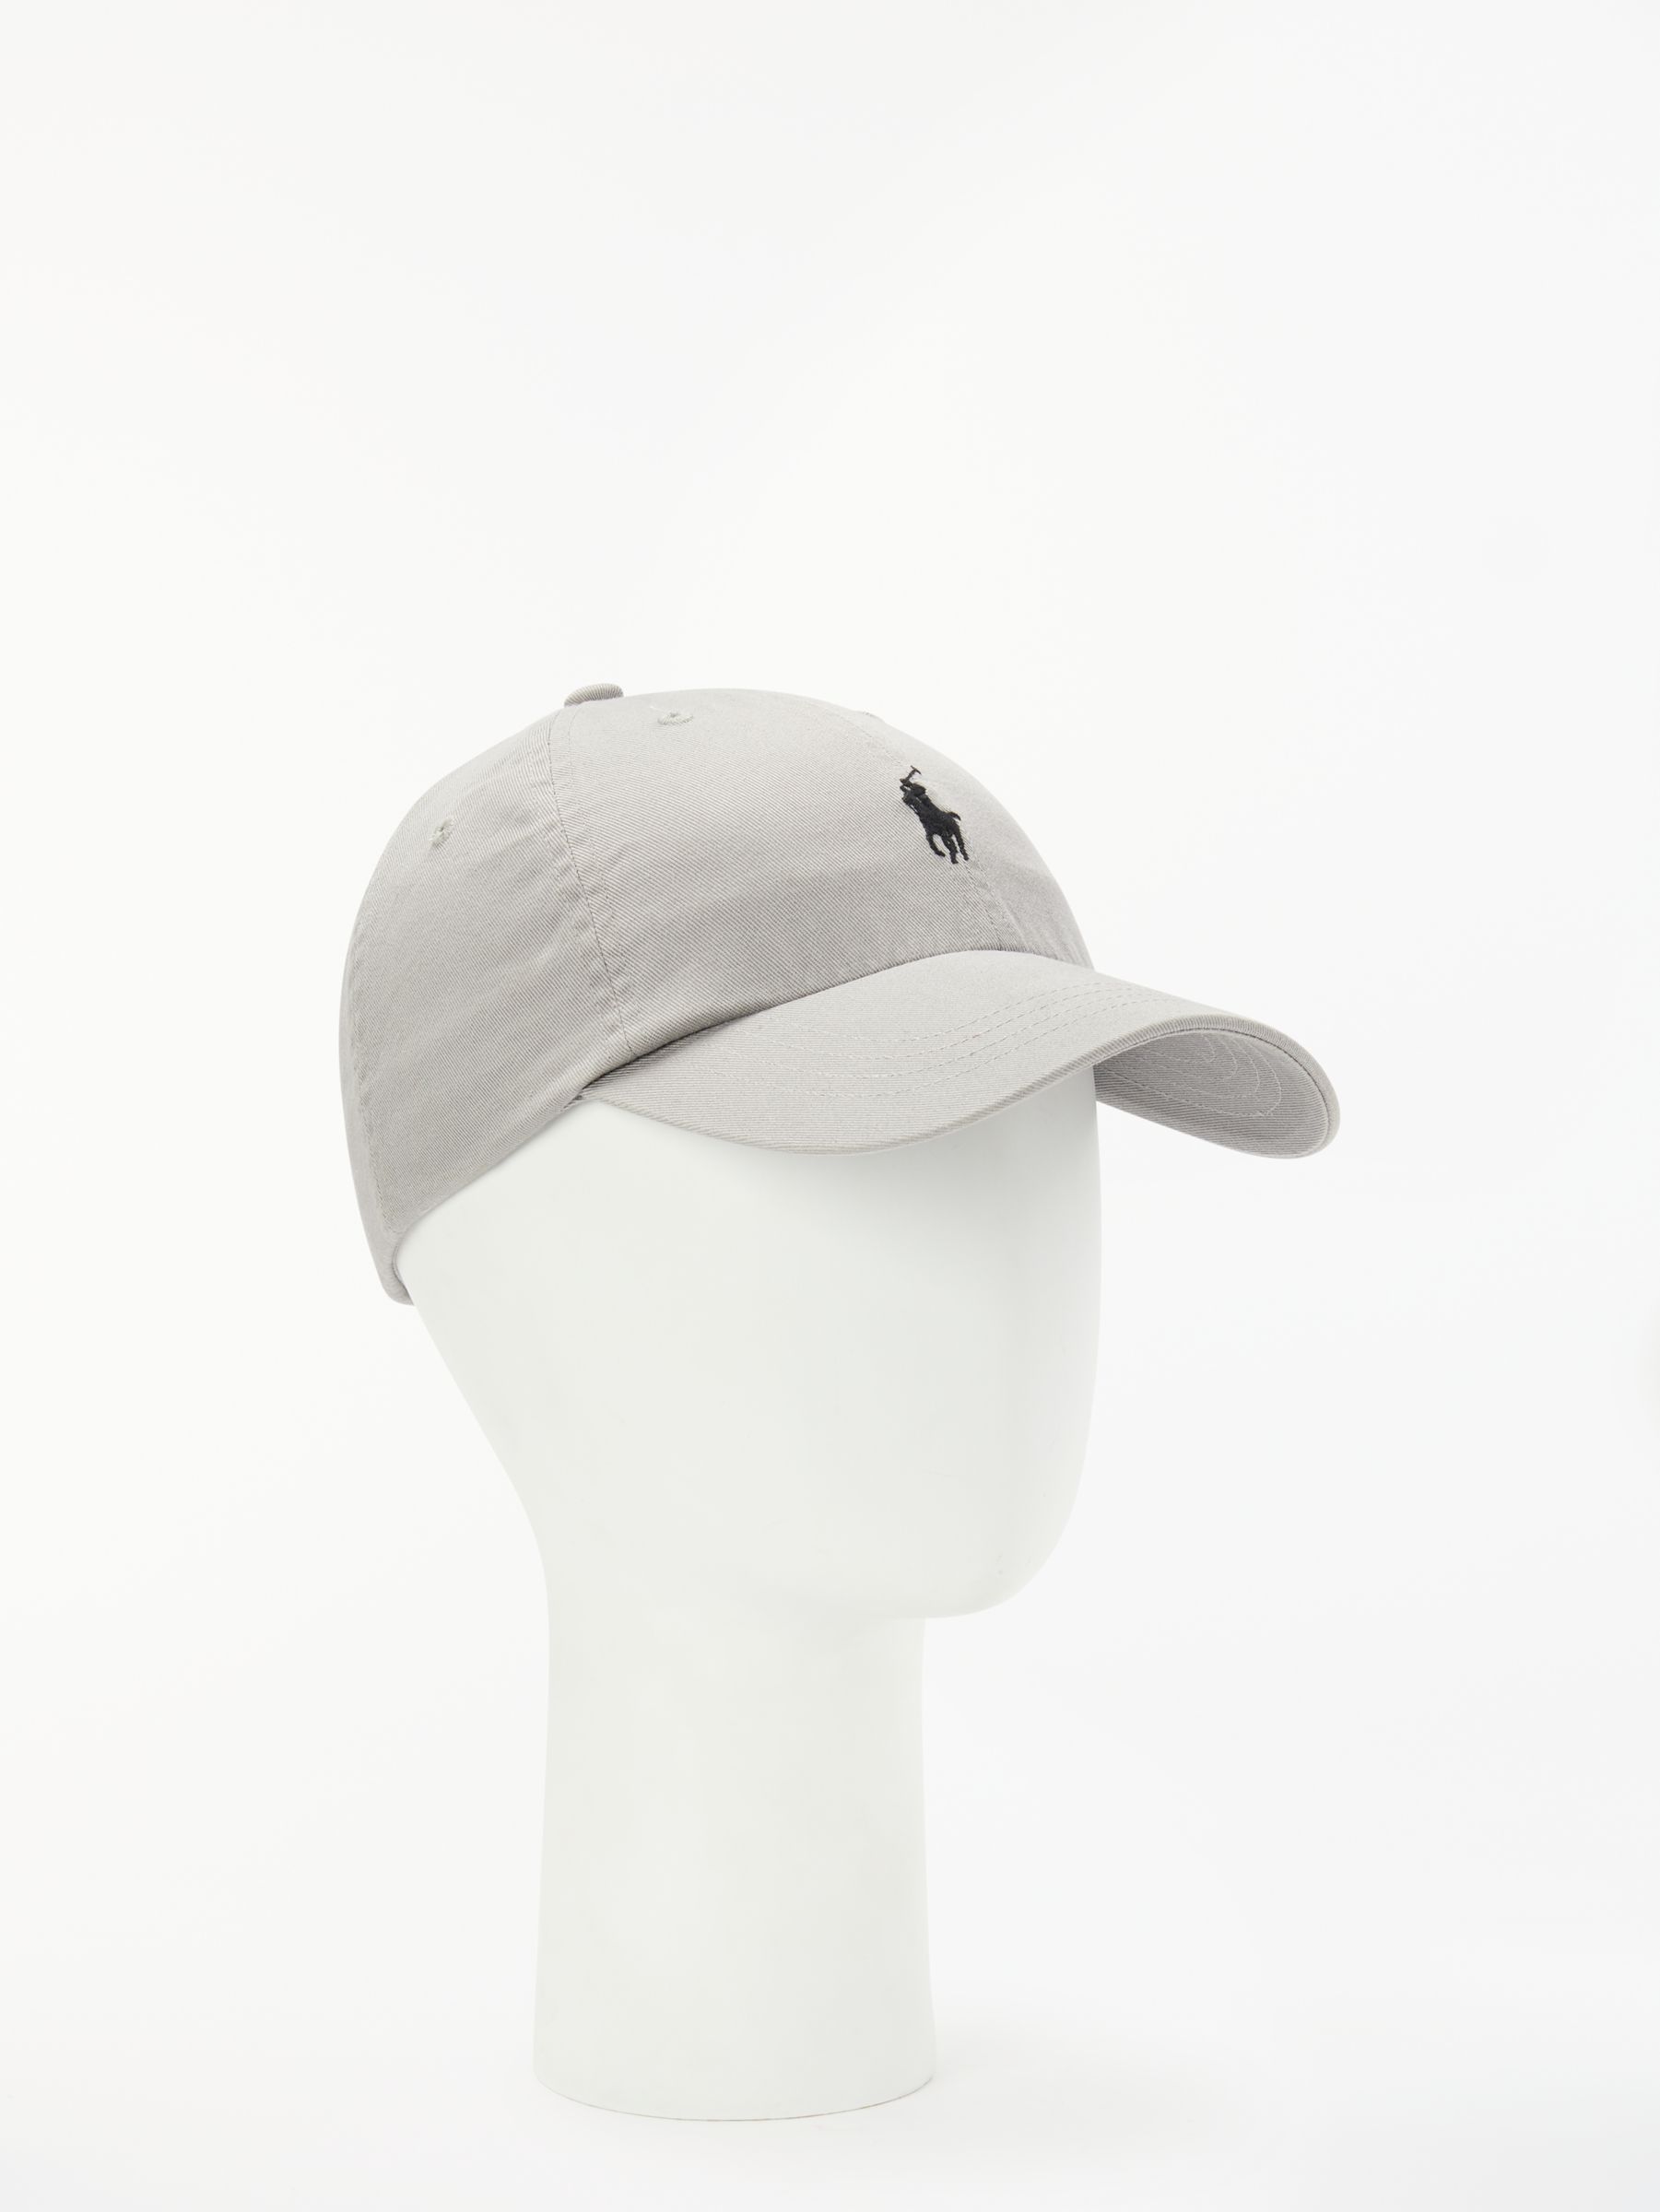 grey polo hat